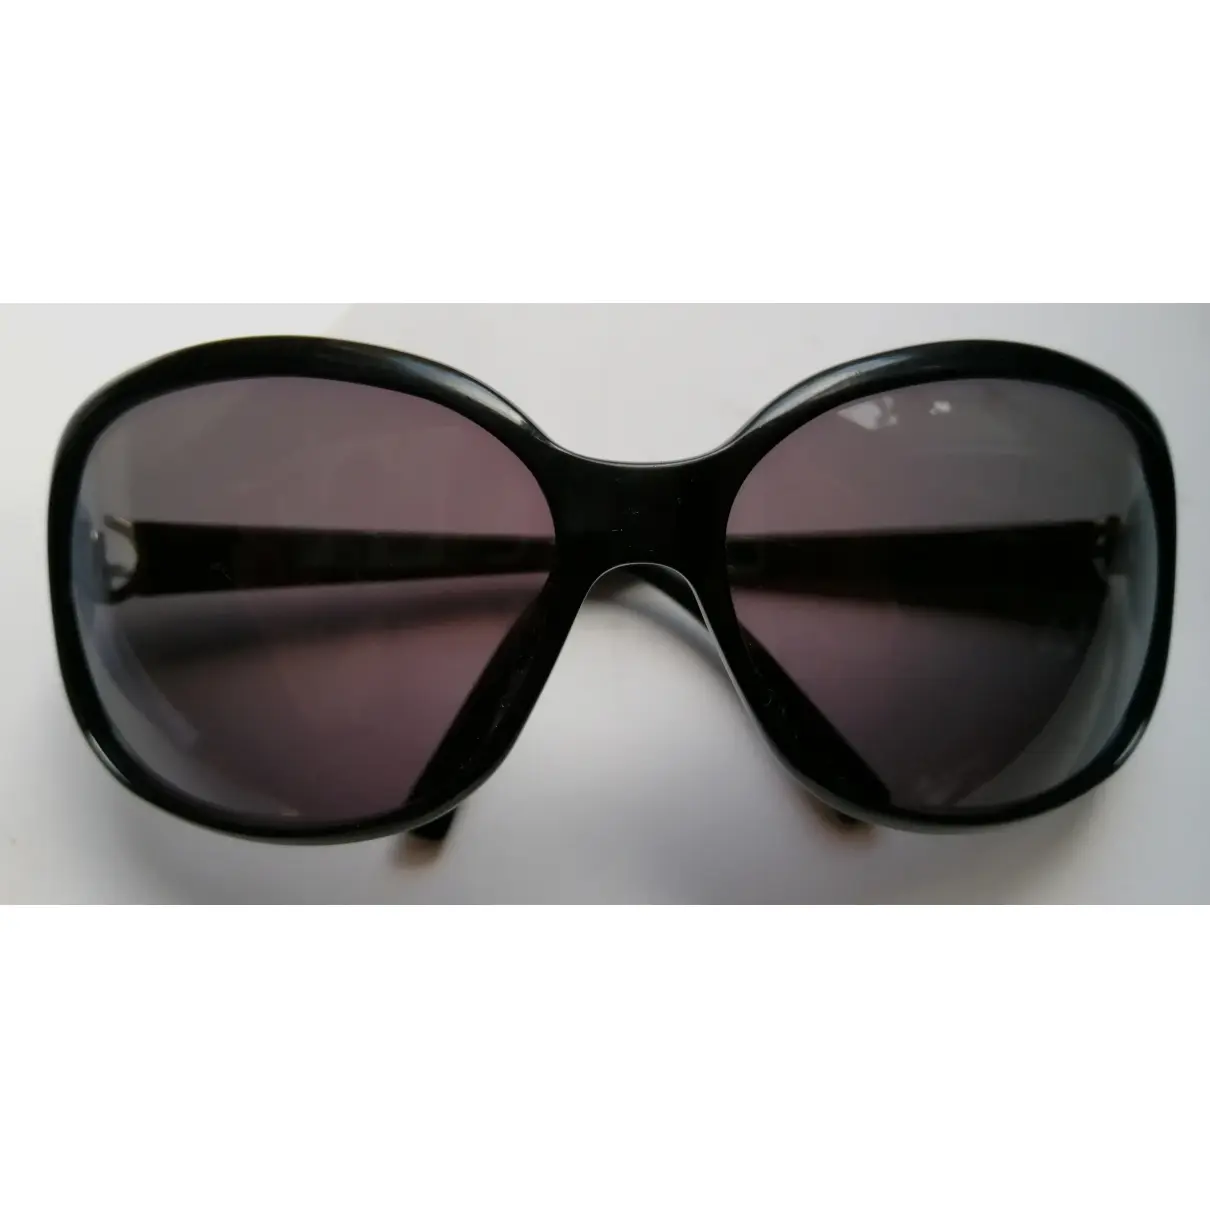 Buy Giorgio Armani Oversized sunglasses online